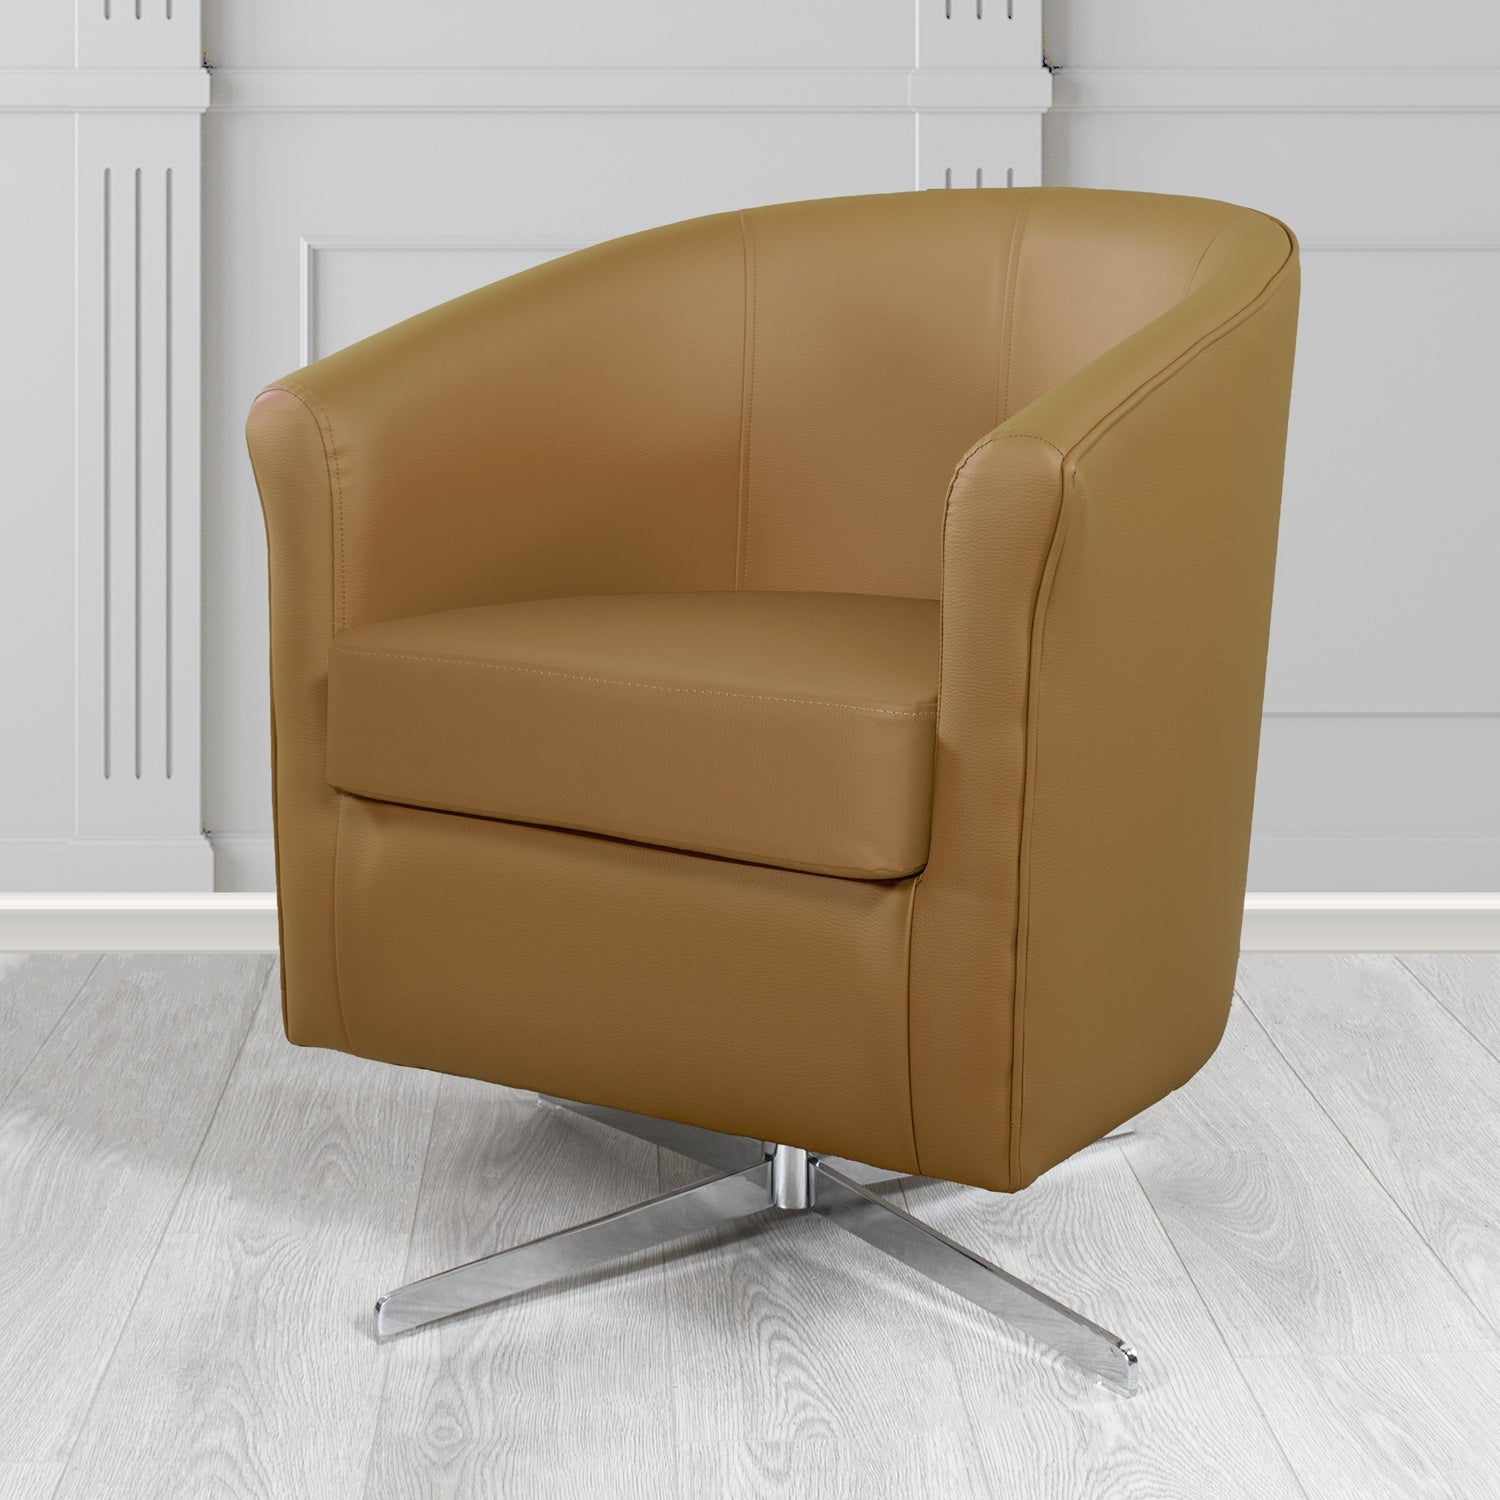 Cannes Swivel Tub Chair in Just Colour Nutmeg Crib 5 Faux Leather - The Tub Chair Shop